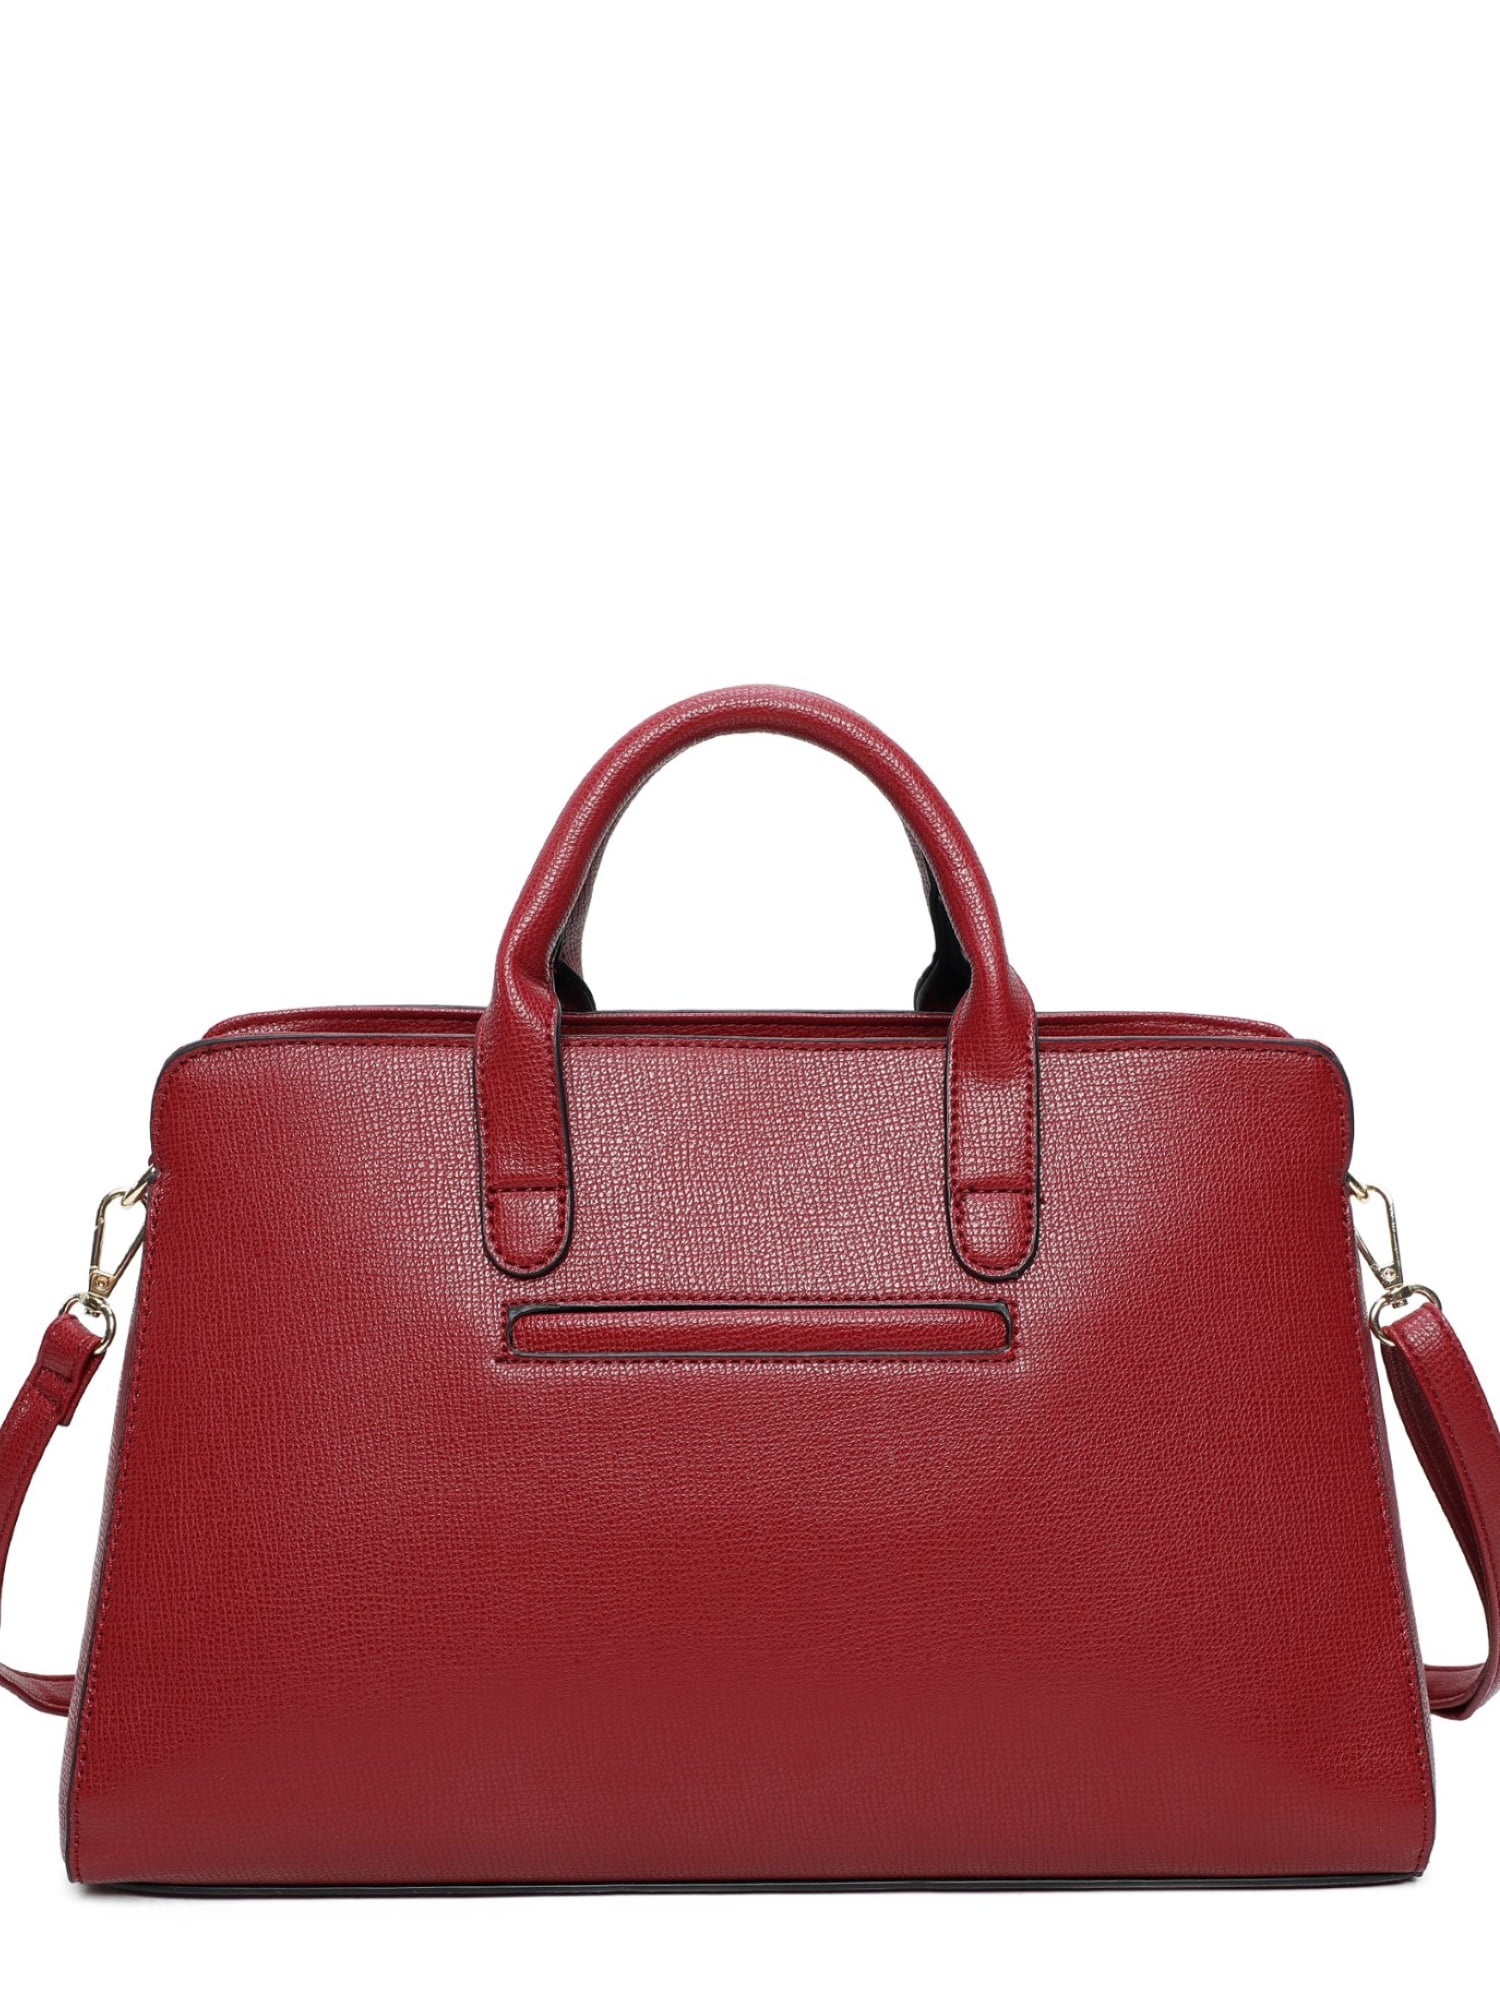 Tote Faux Leather Vera New York Handbags Bag Satchel Bradley